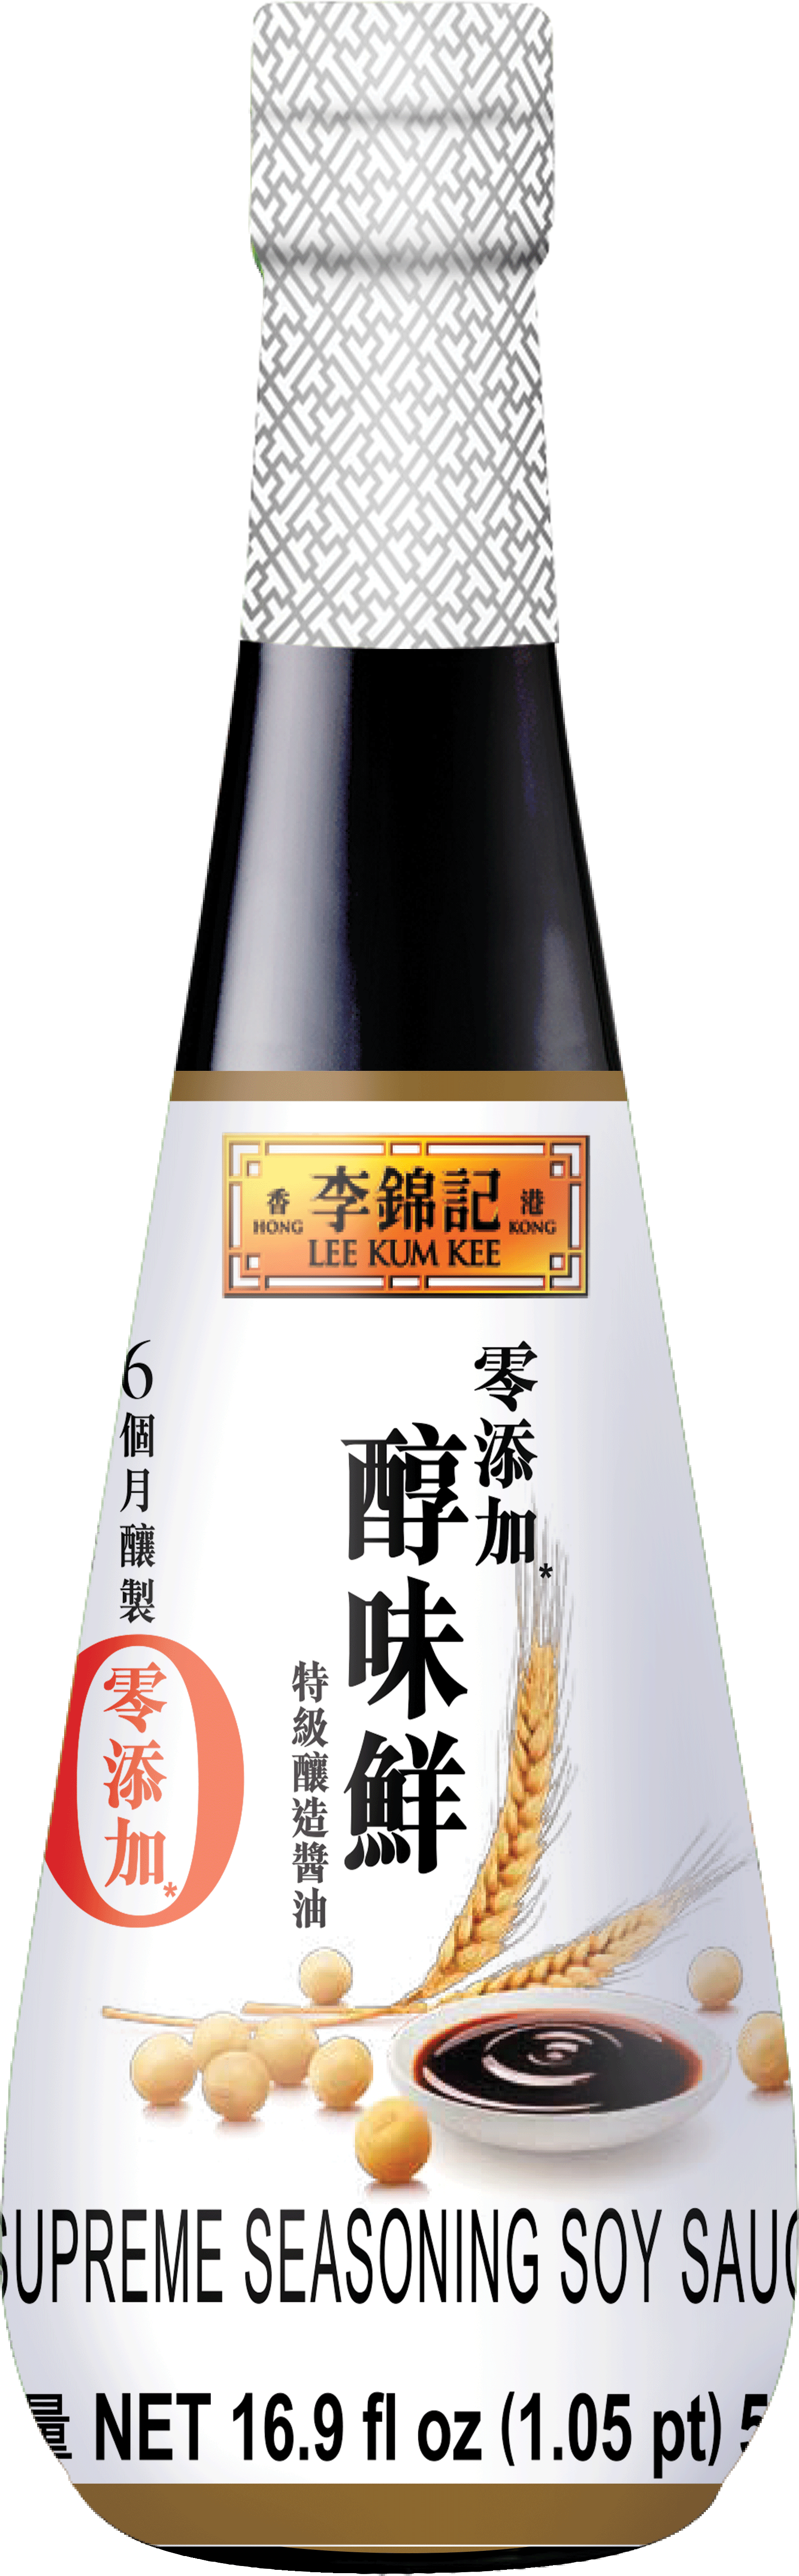 Lee Kum Kee Supreme Seasoning Soy Sauce Bottle